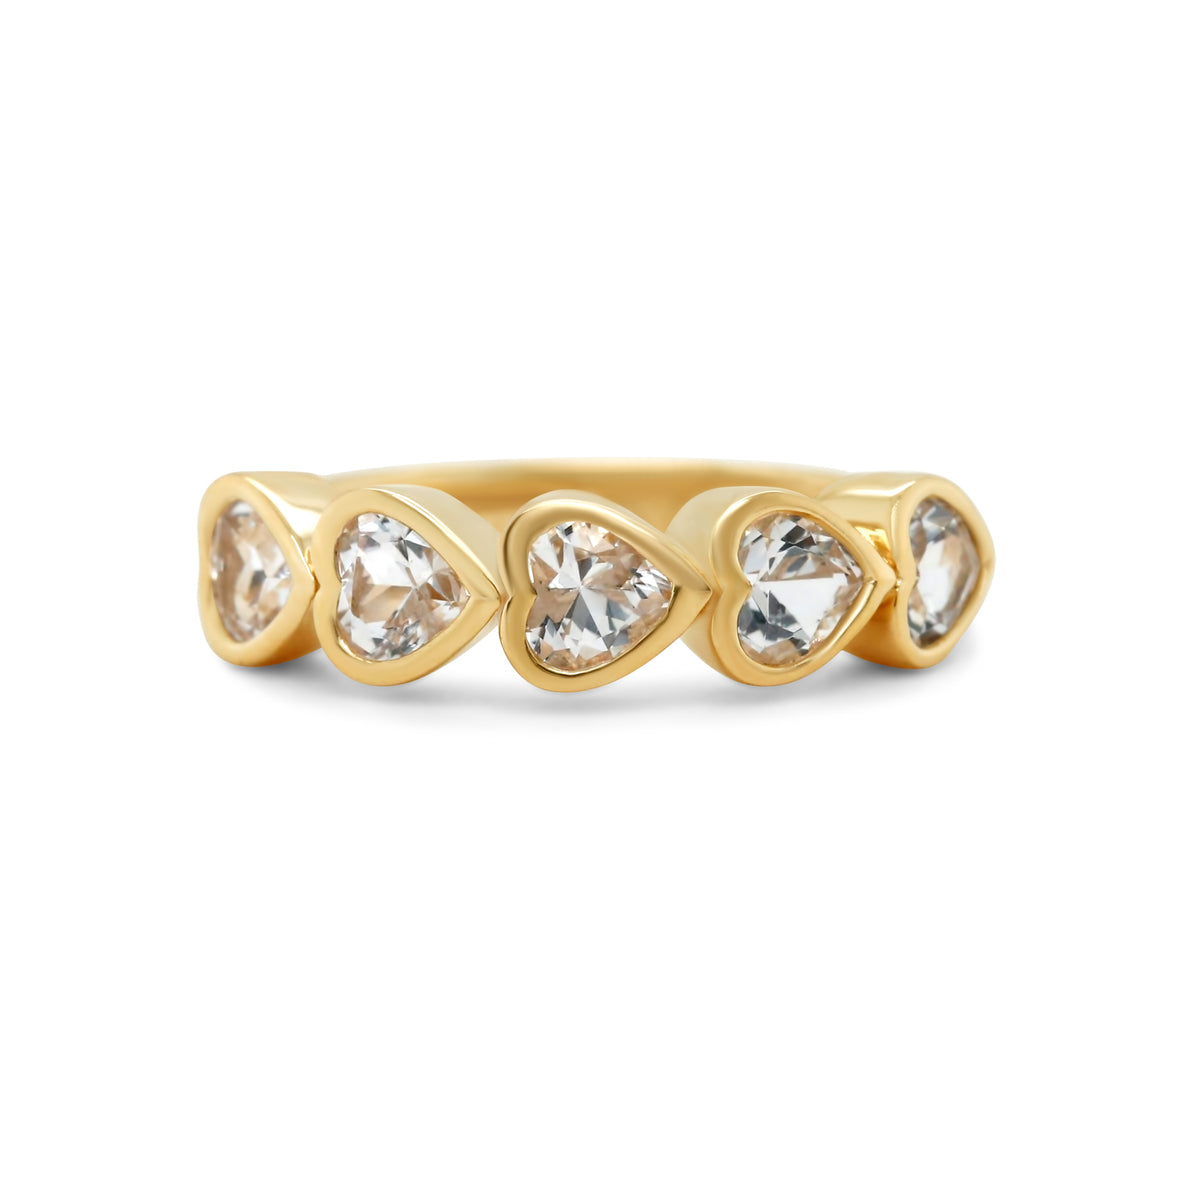 14k yellow gold bezel set east west heart shape white topaz gemstone ring